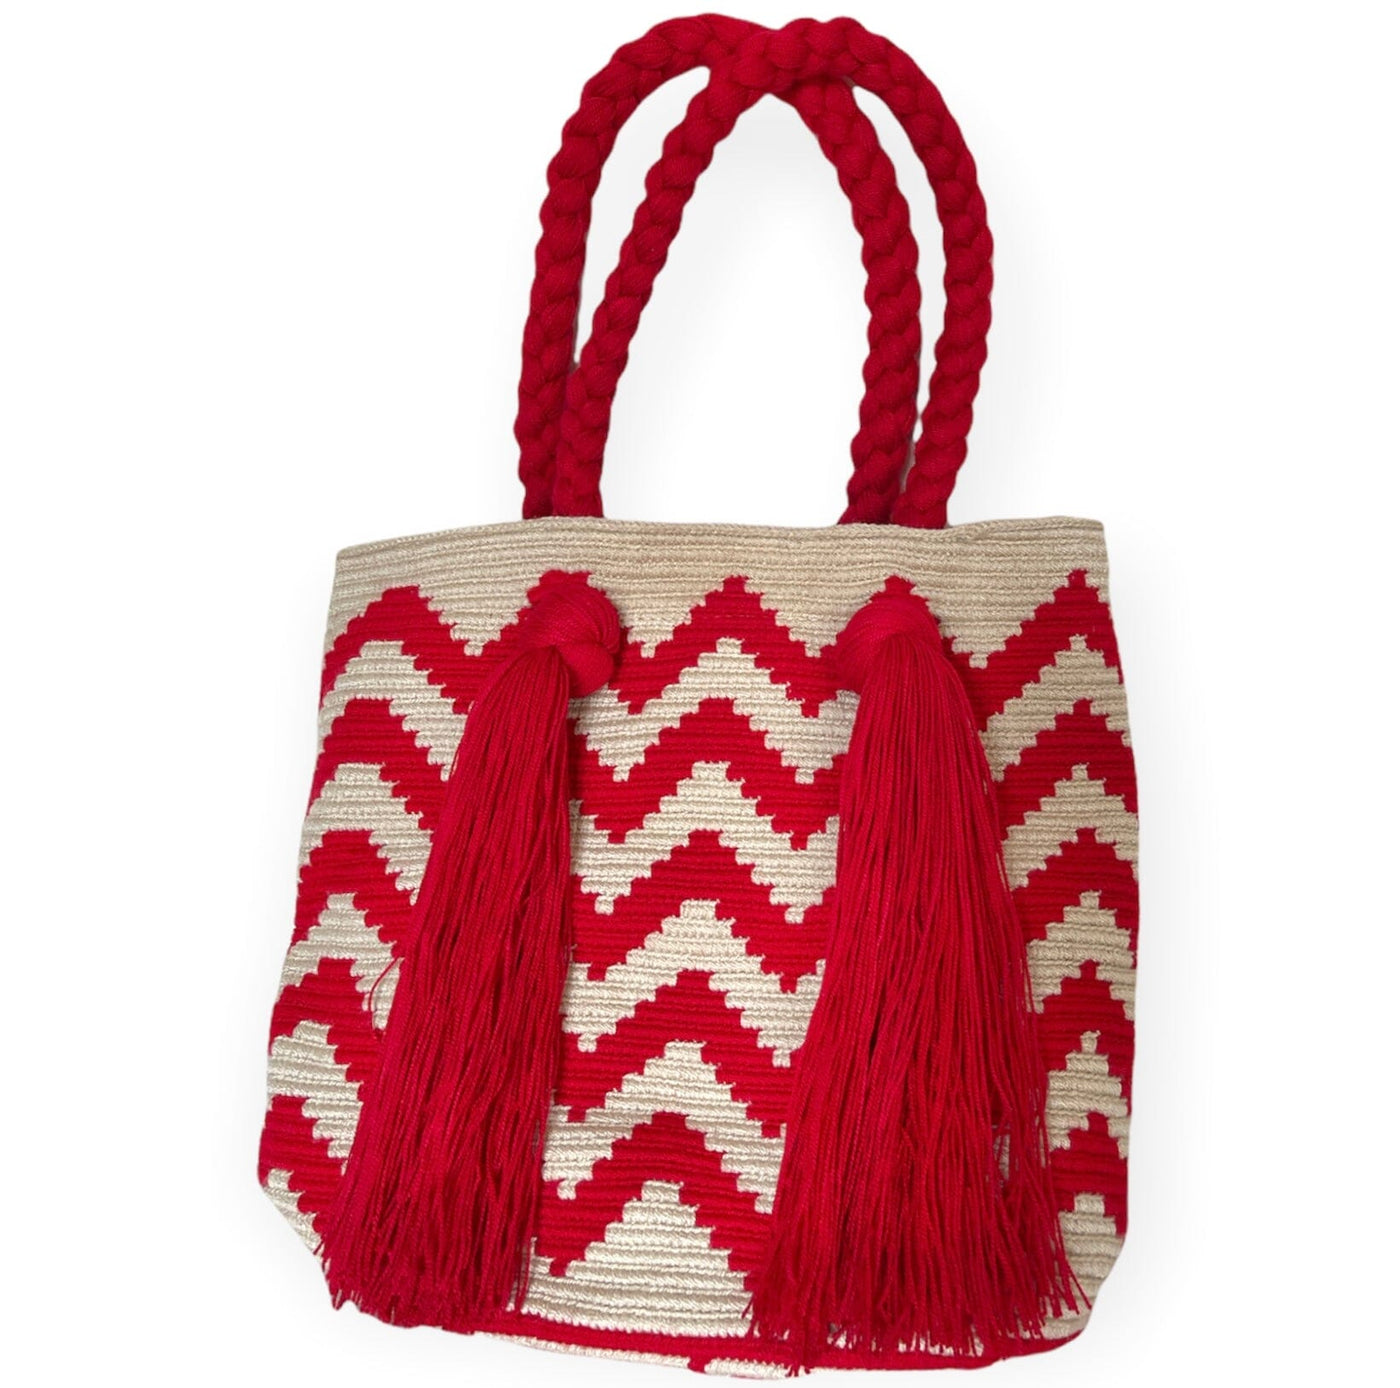 Red Tote Beach Bag | Tassel Boho Bag | Chevron Crochet Pattern | Colorful4U